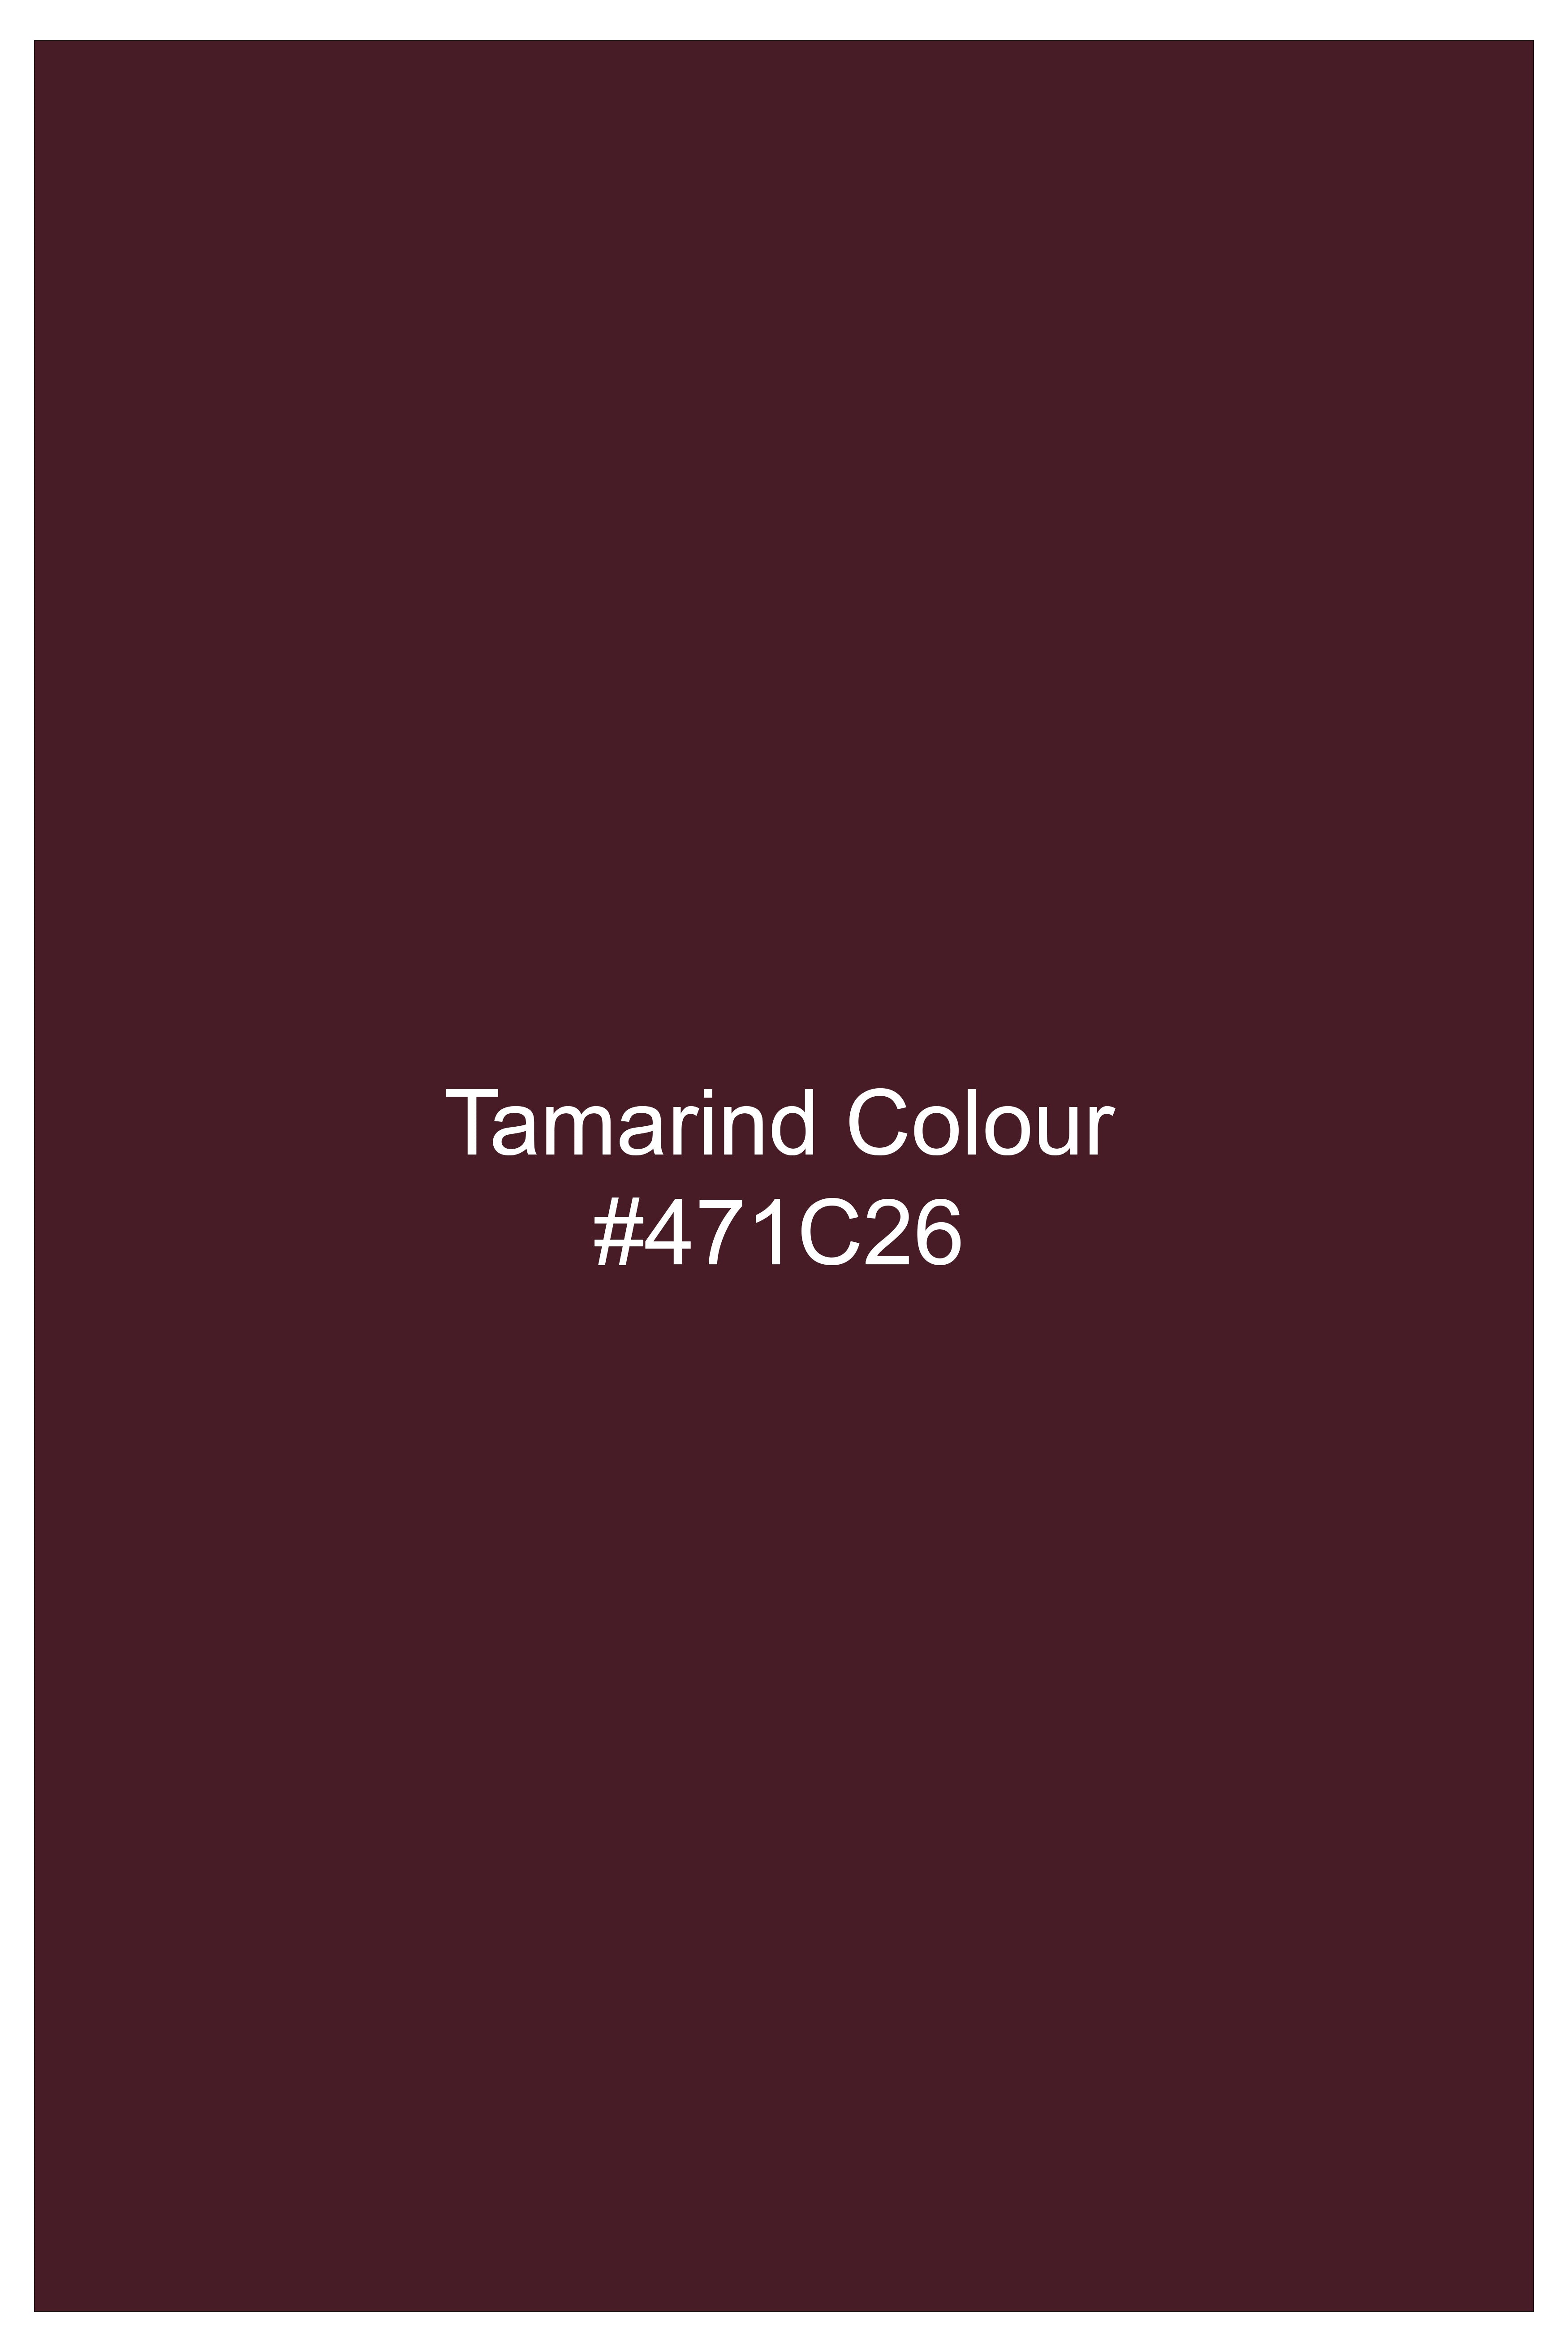 Tamarind Maroon Wool Blend Tuxedo Suit